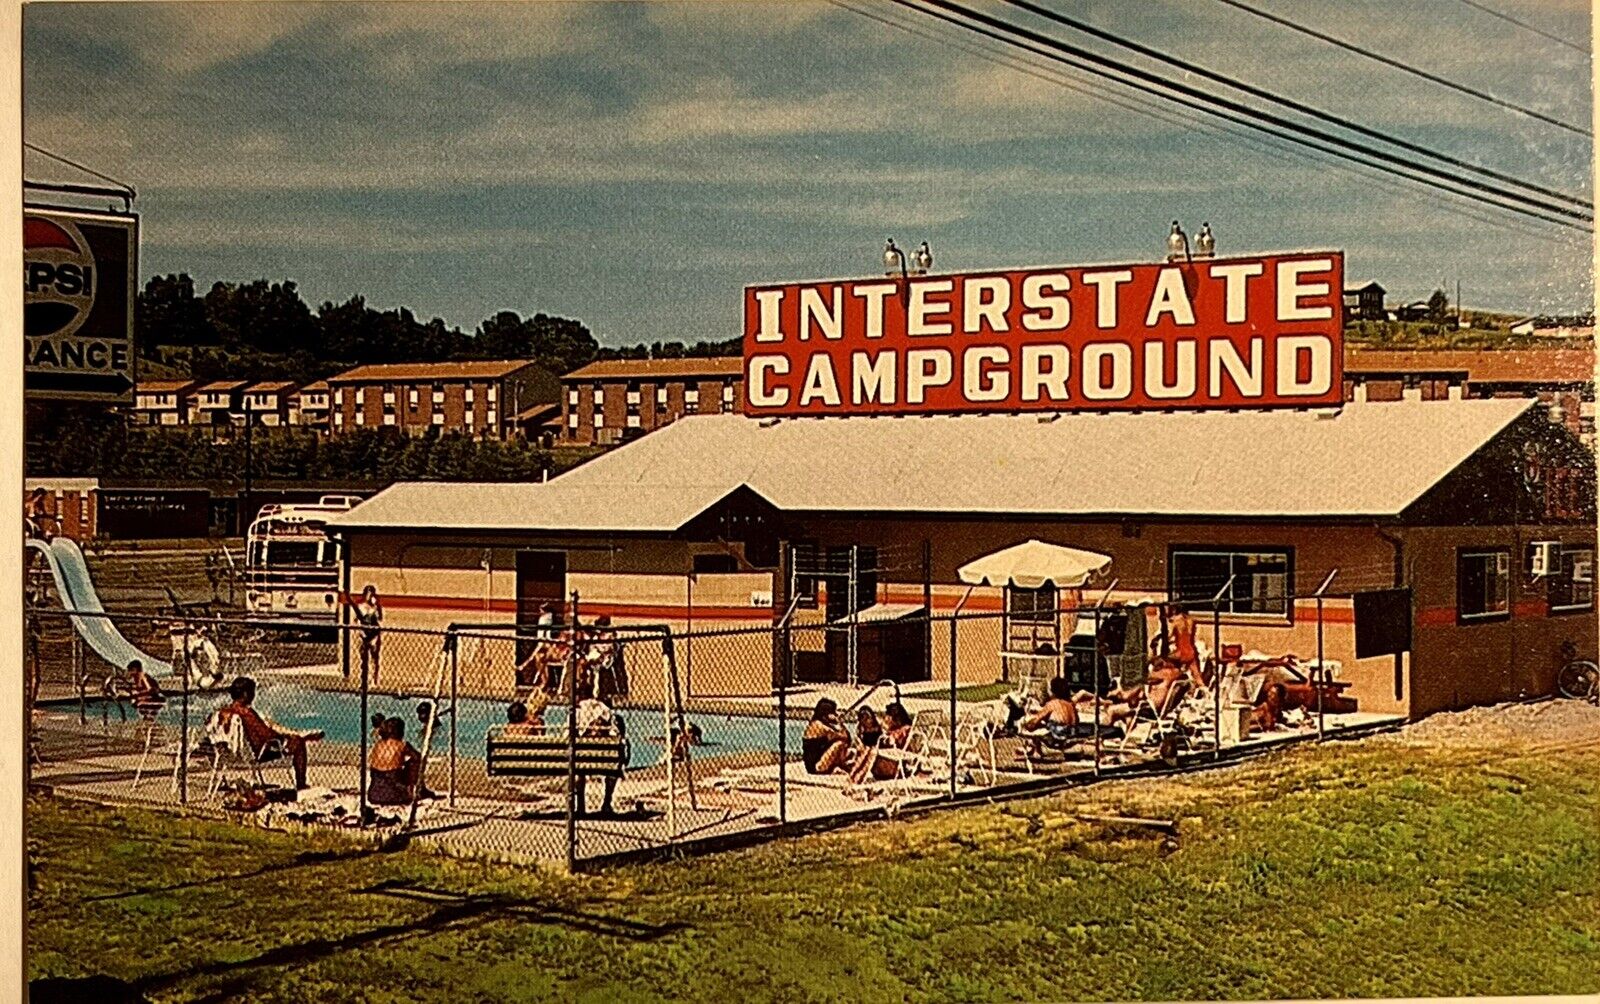 Chilhowie Virginia Interstate Campground Vintage Postcard I-81 Pepsi Sign Pool